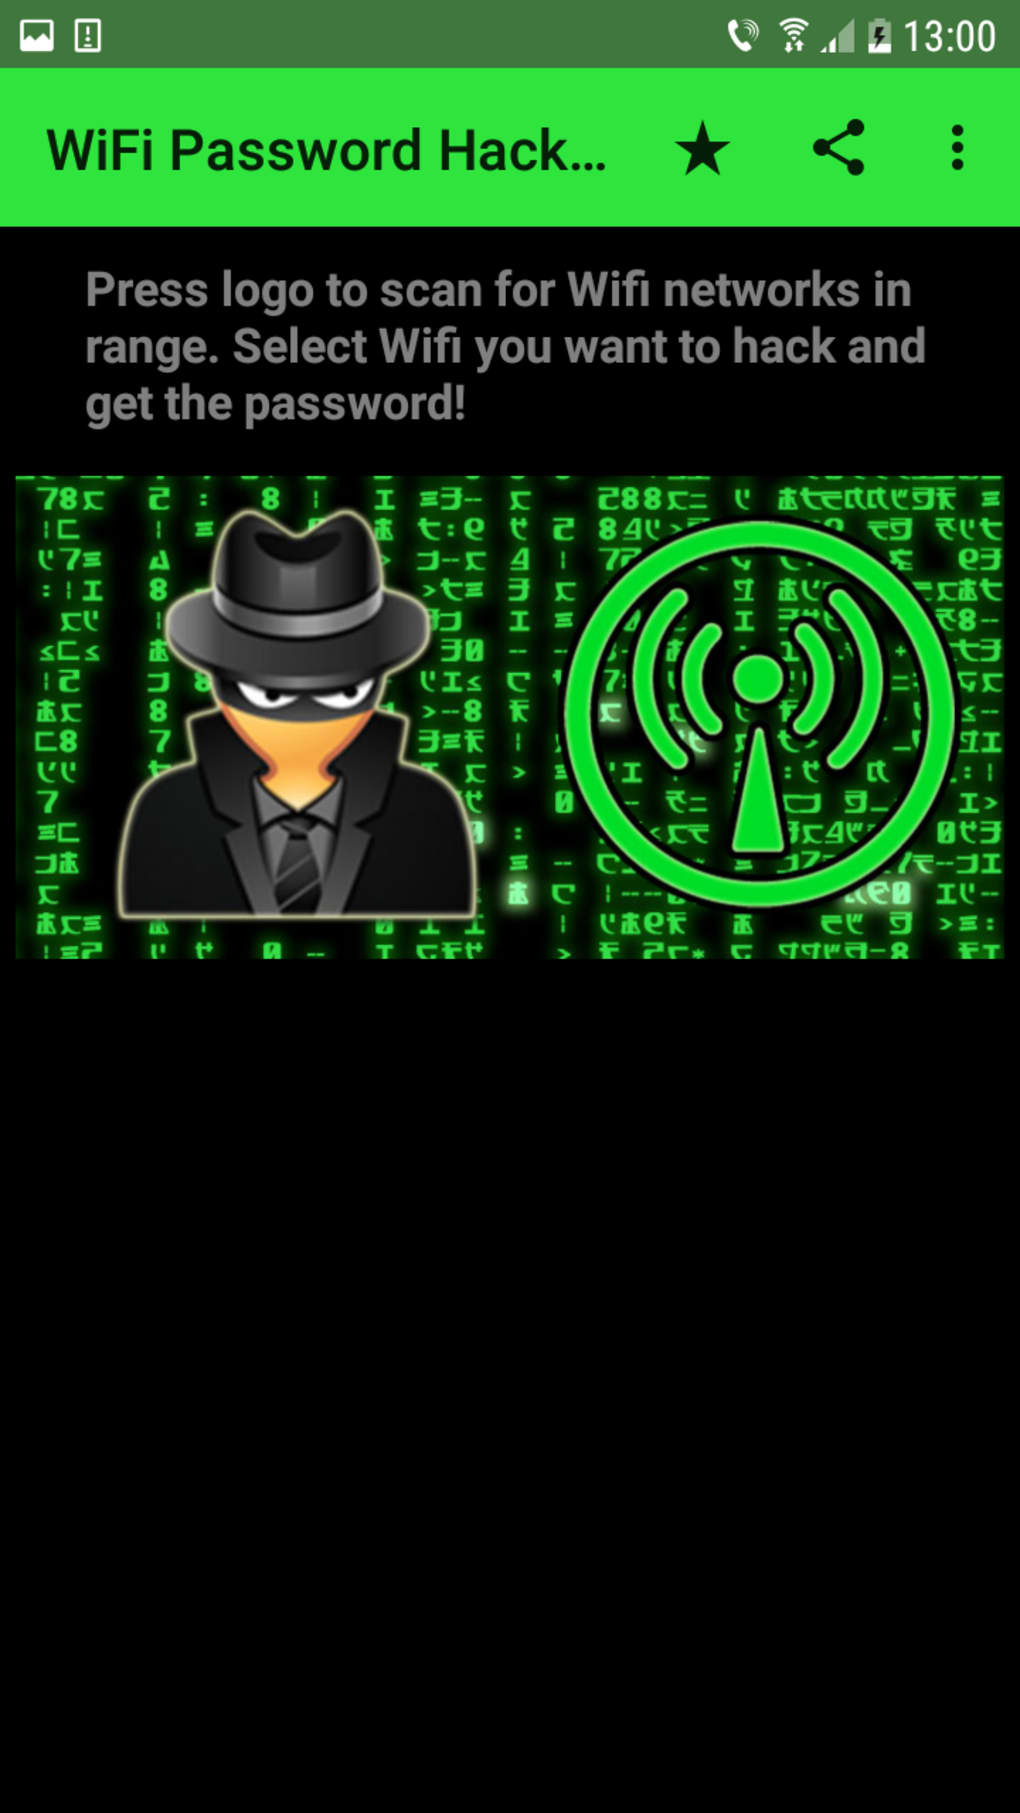 T me hacking. WIFI Hacker APK. Hacker Tool download. Игра про детектива и хакера на андроид. ZXING org WIFI password Hack.